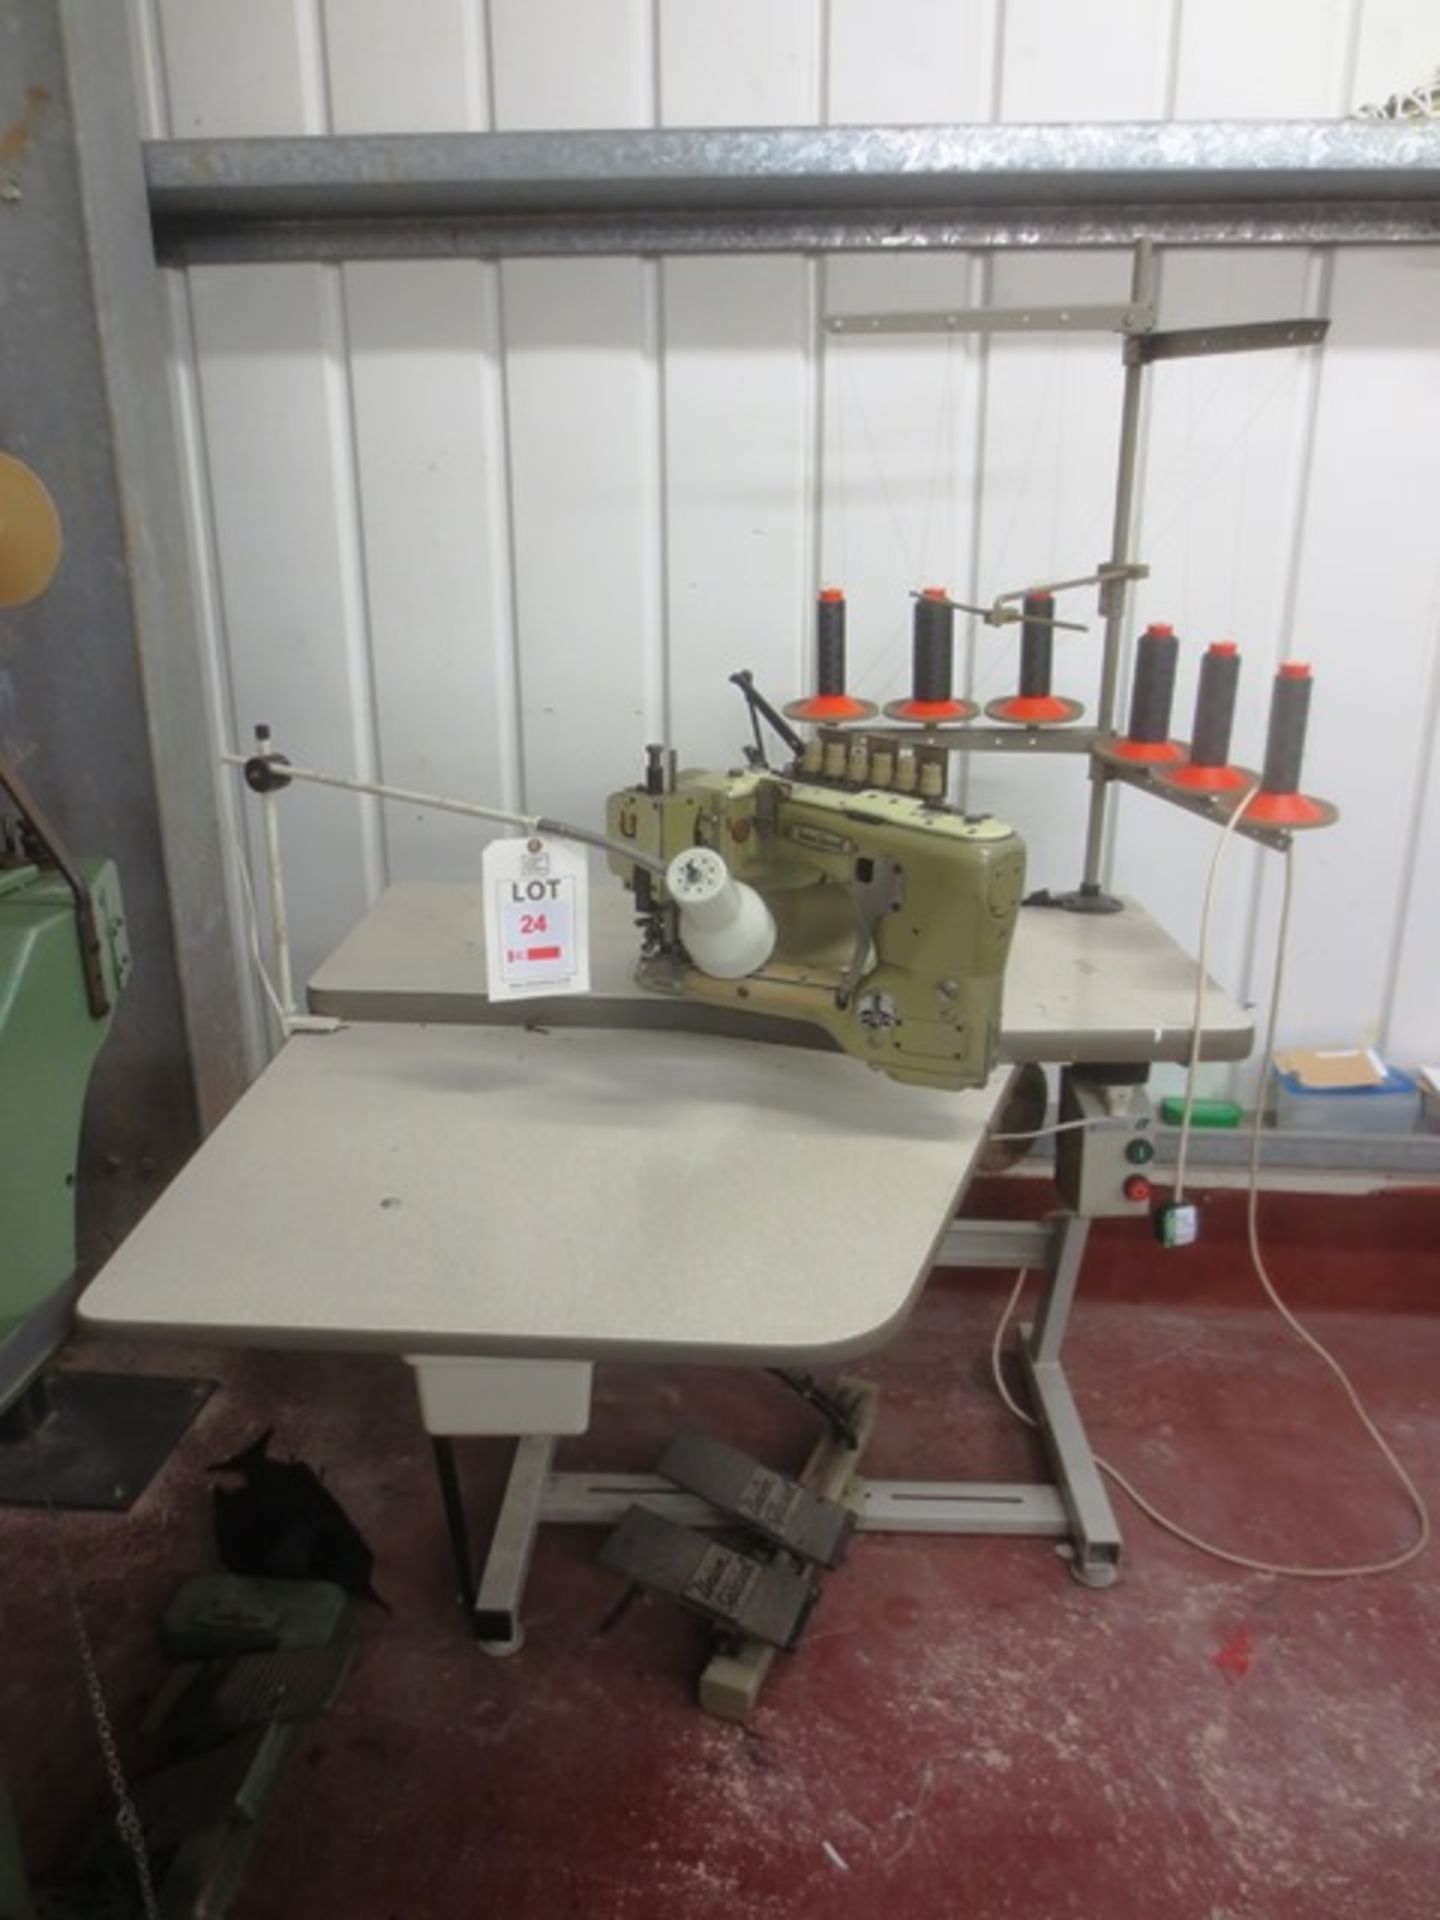 Union Special 6 thread arm over locker sewing machine, model 36200PJ, serial no: 1755767